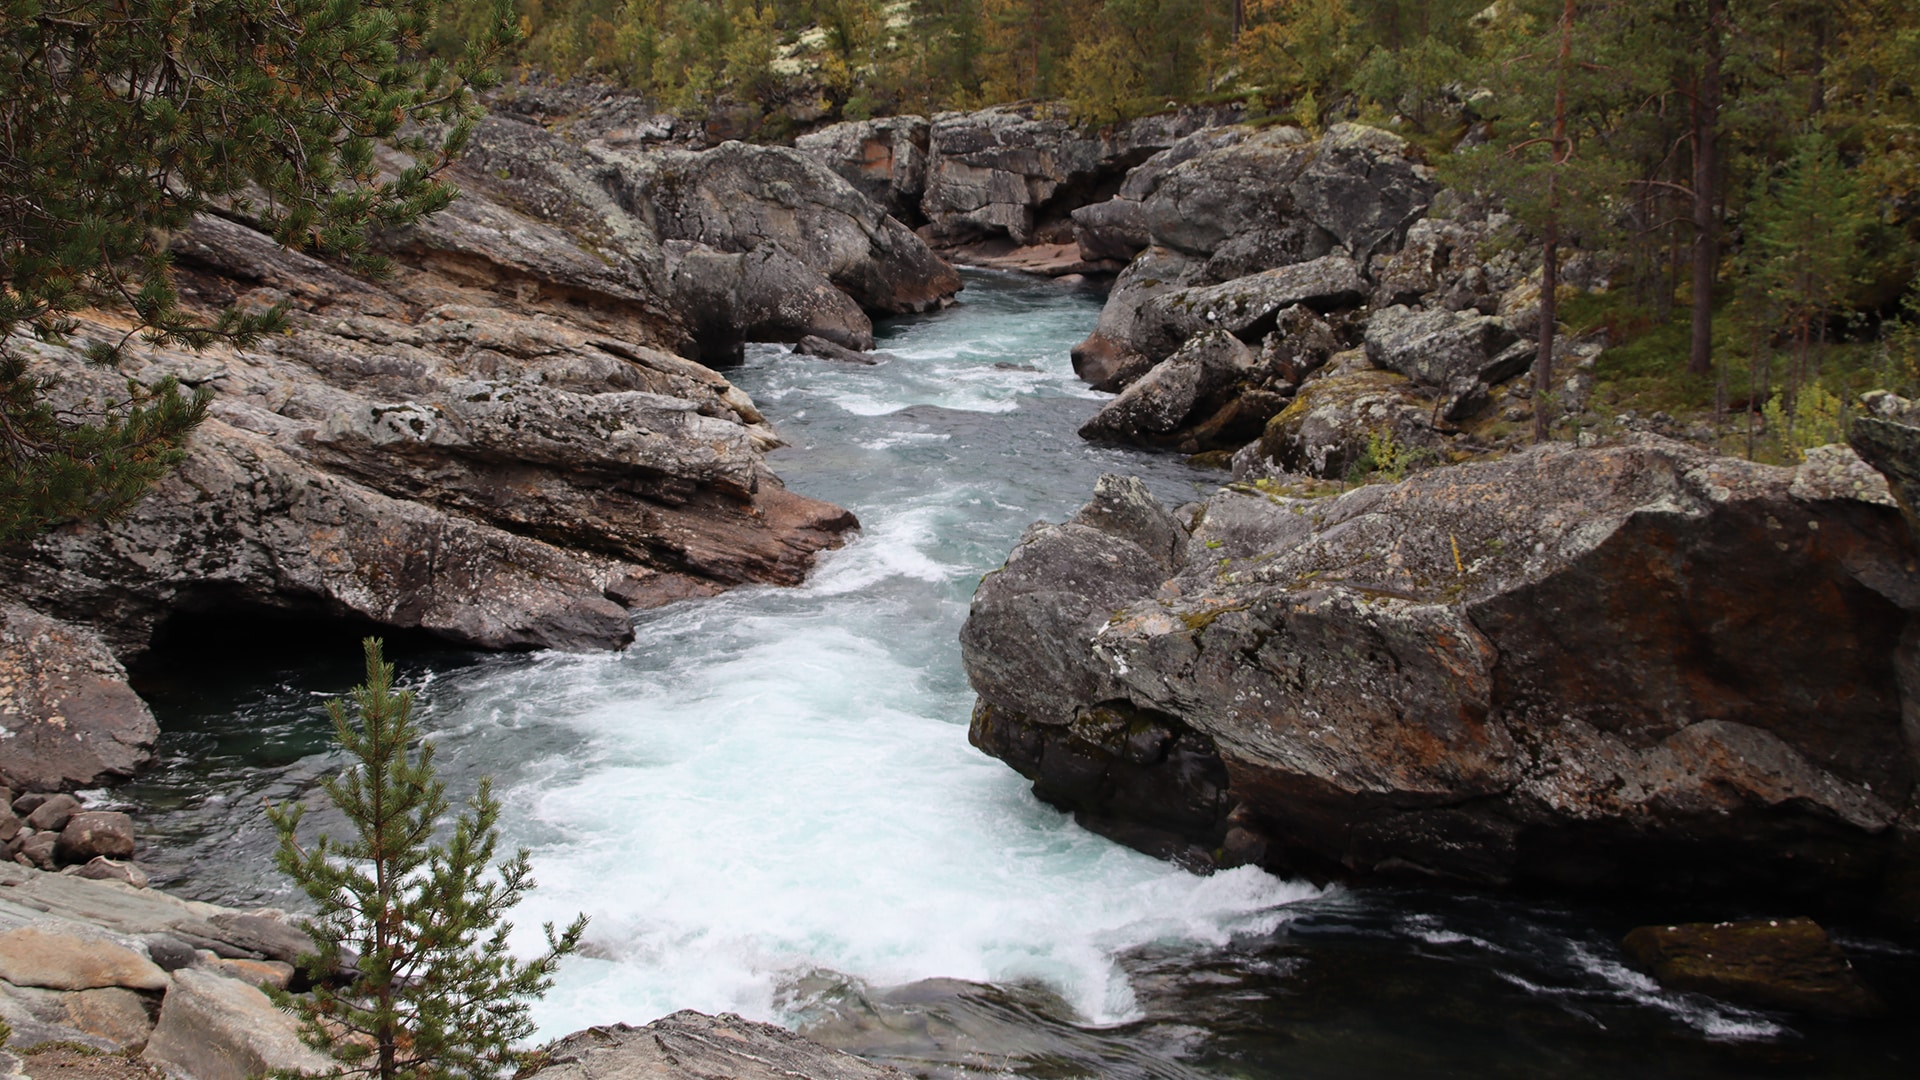 The river Sjoa cascades down Ridderspranget surrounded by rocks.